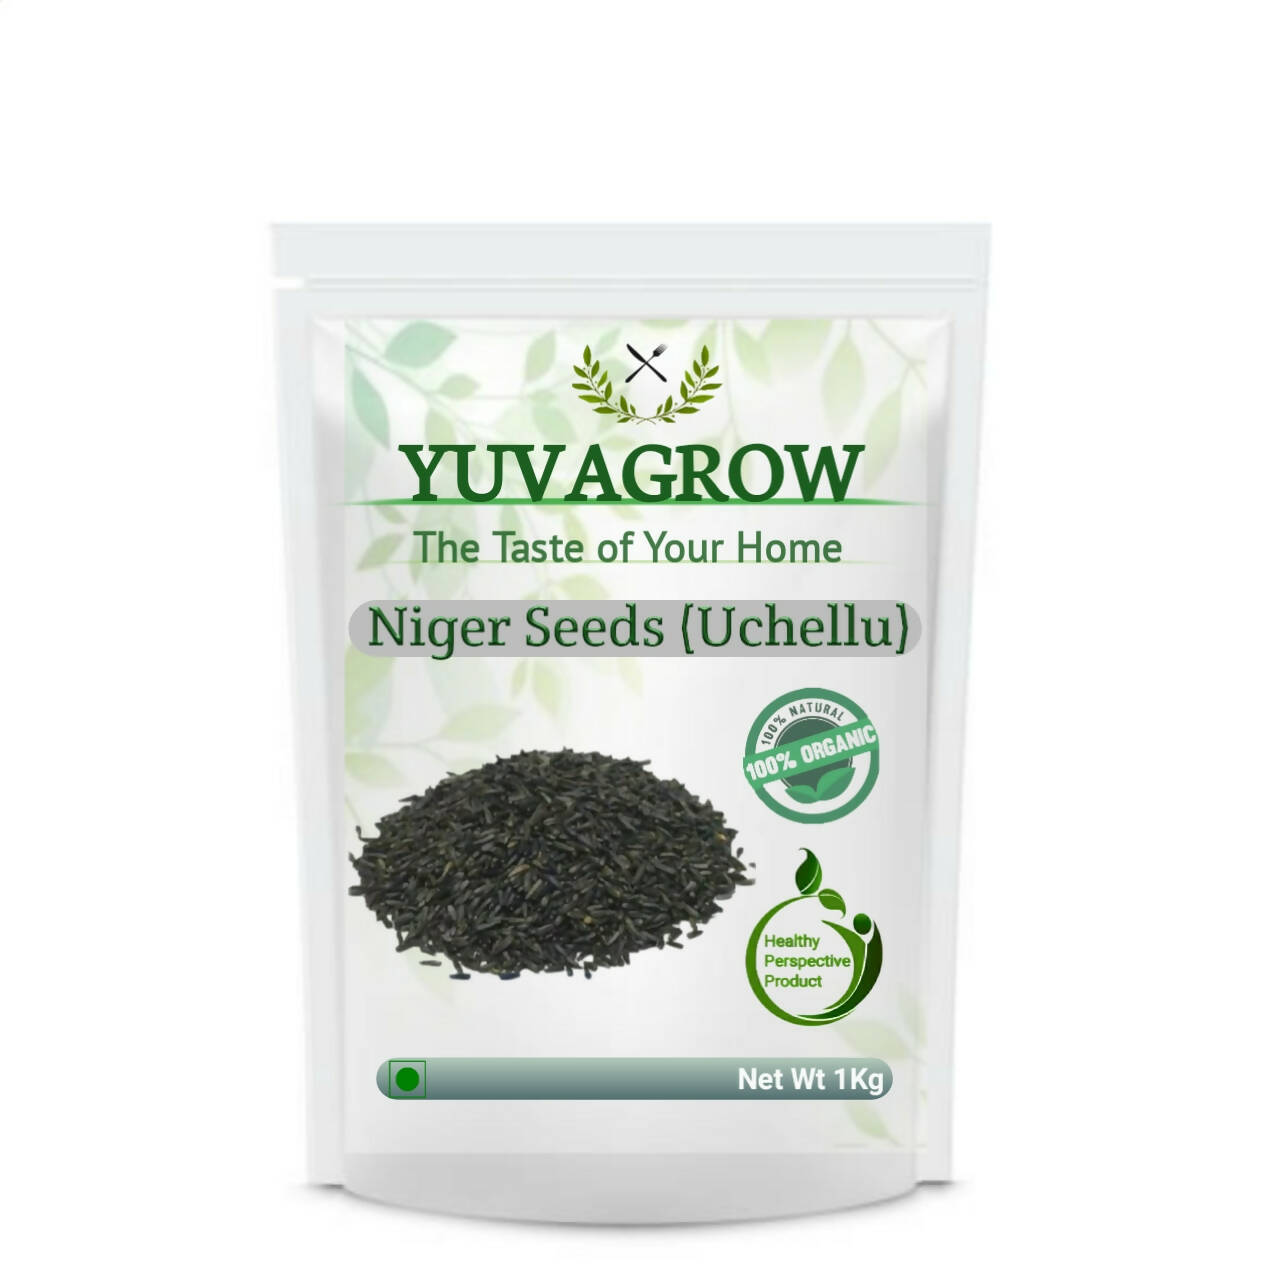 Yuvagrow Niger Seeds (Uchellu) - buy in USA, Australia, Canada